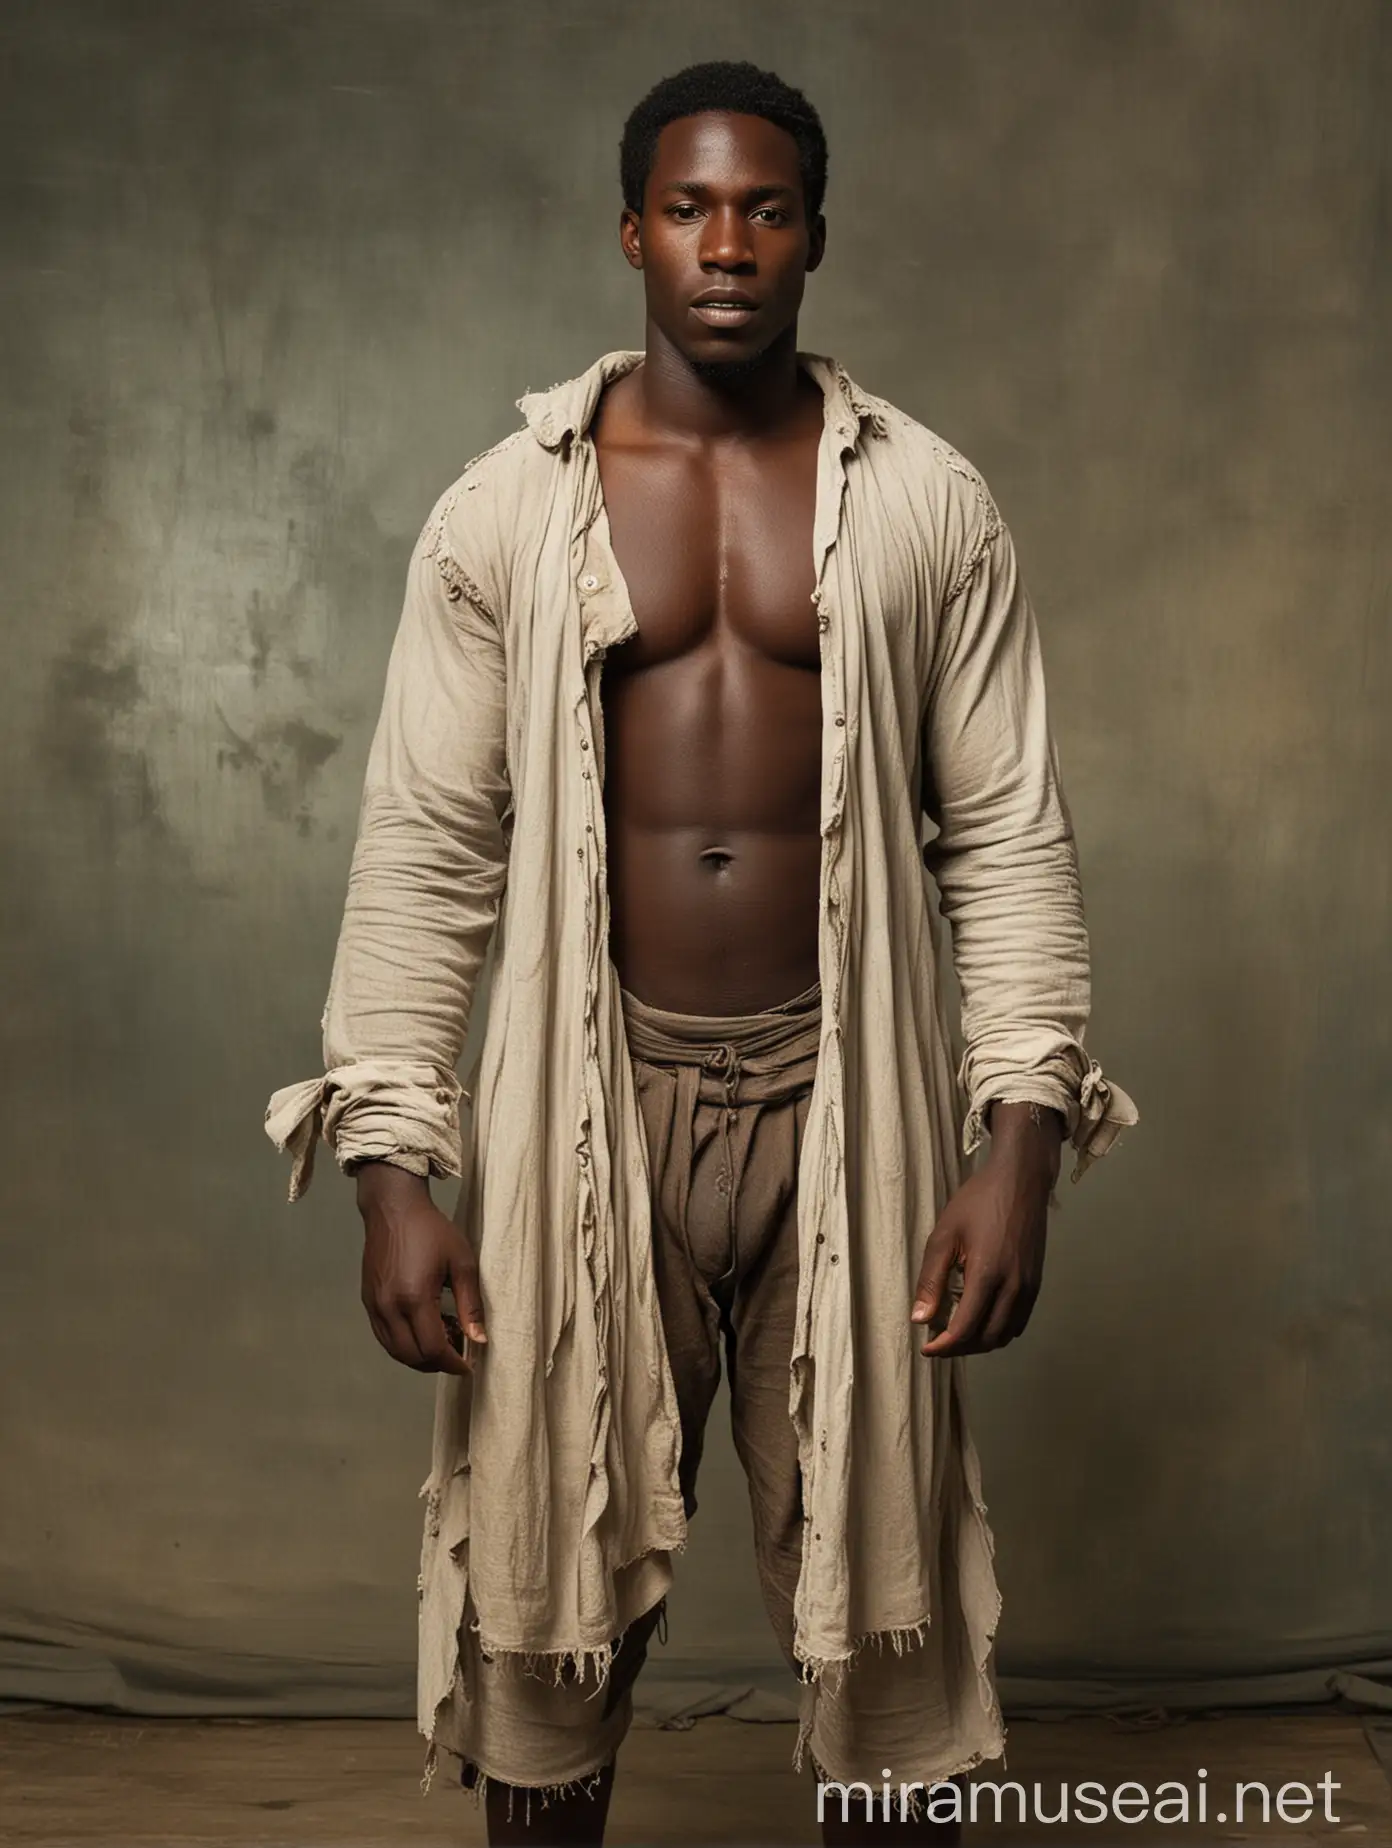 Historical Depiction Black Slave in Tattered Clothing